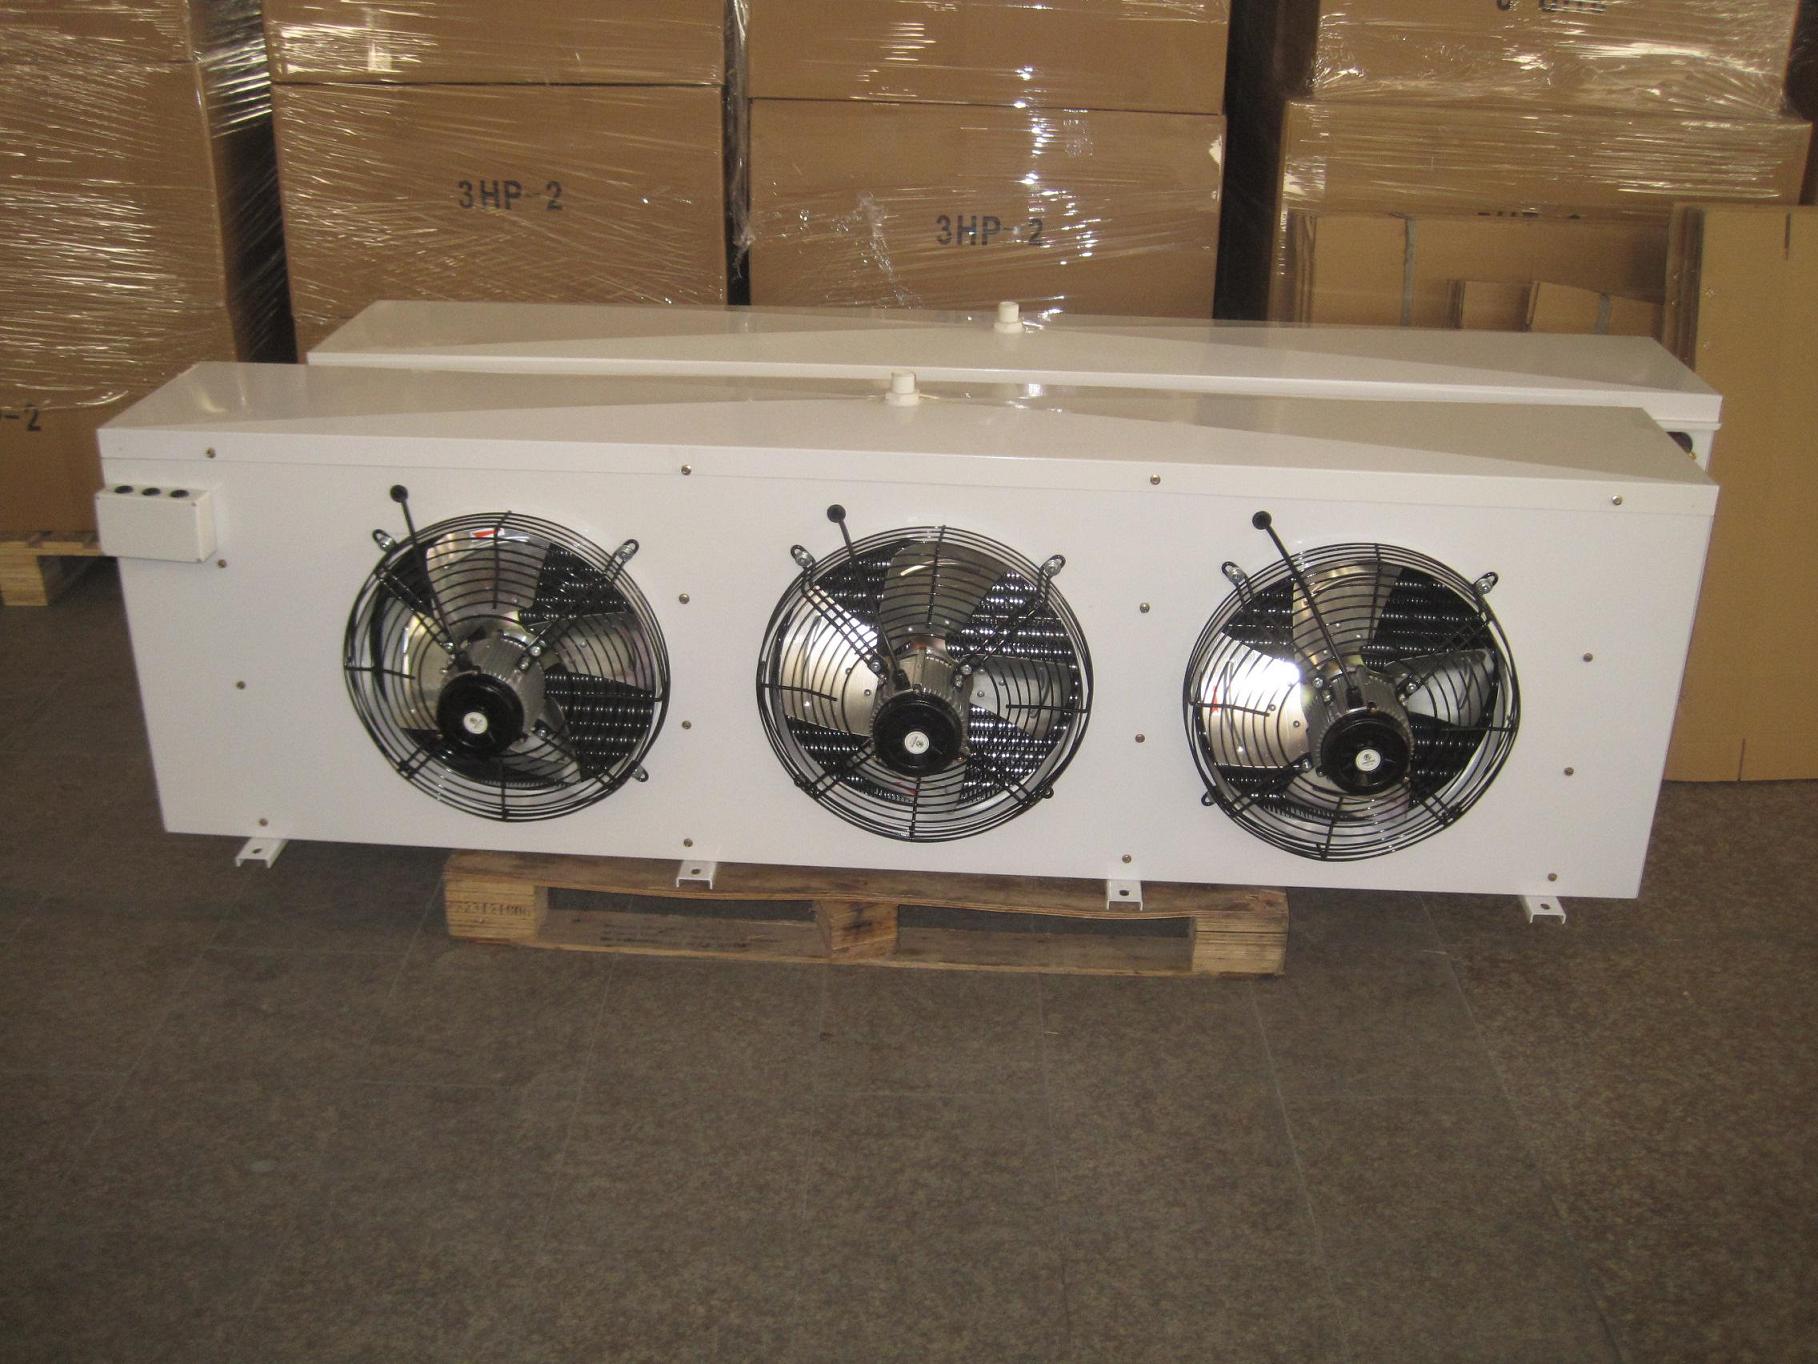 Air Unit evaporative cooler for freezer